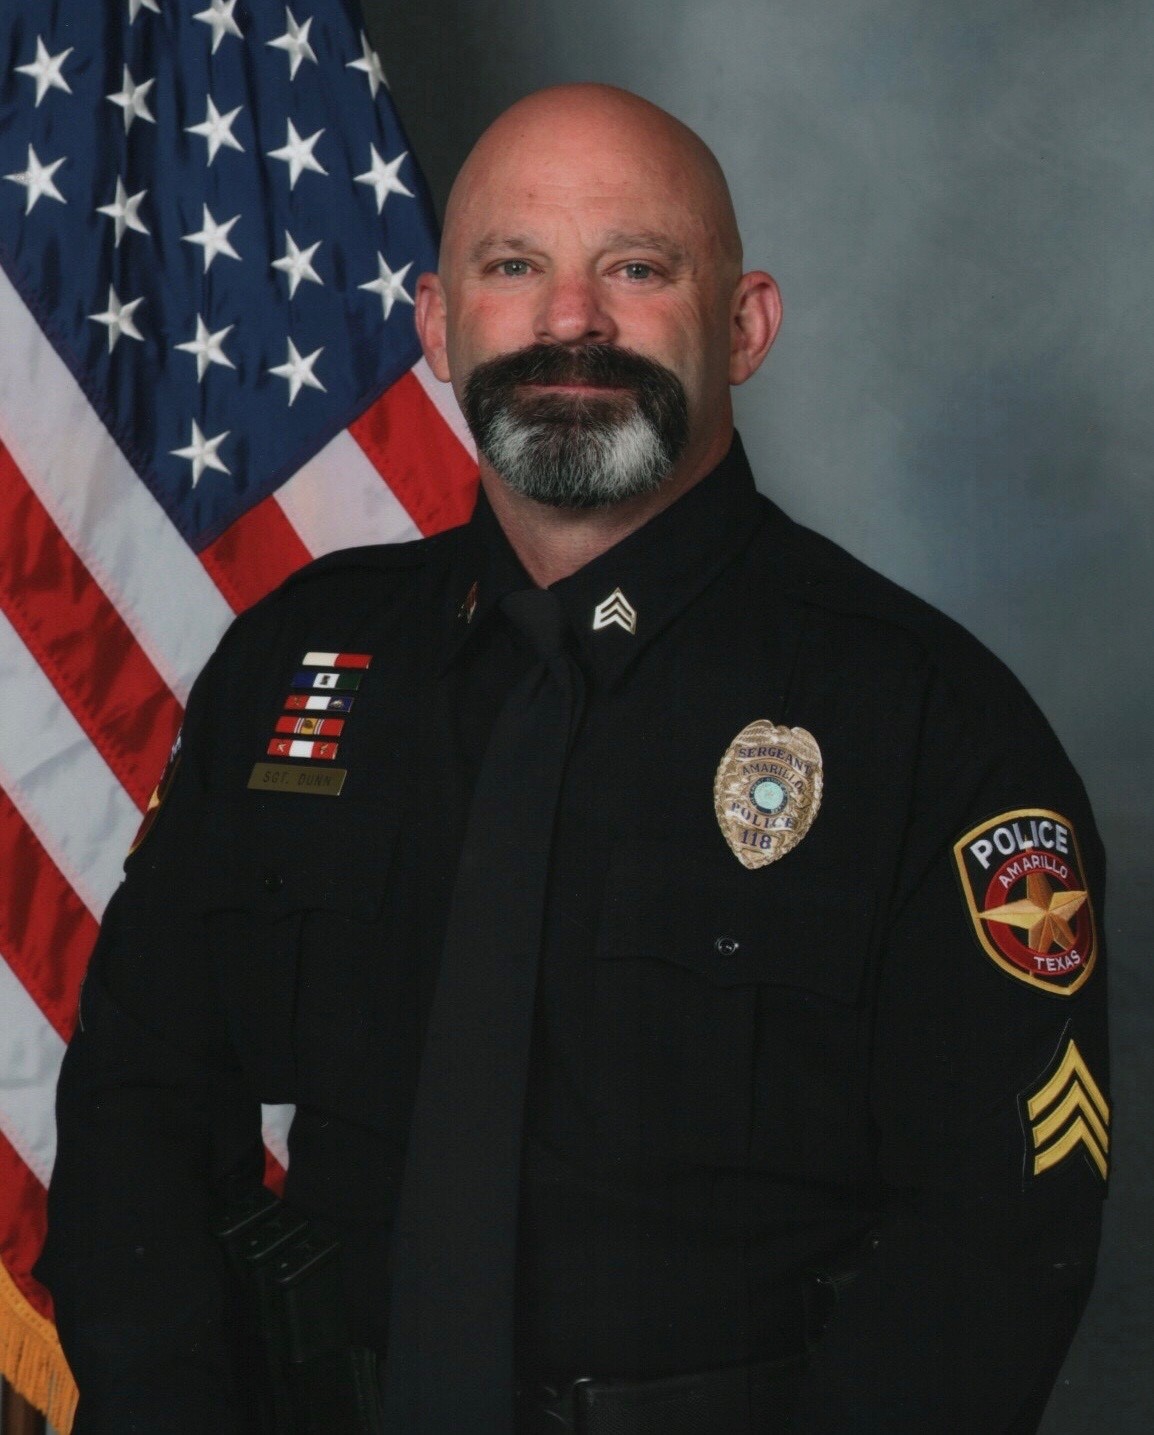 Sergeant Michael David Dunn | Amarillo Police Department, Texas